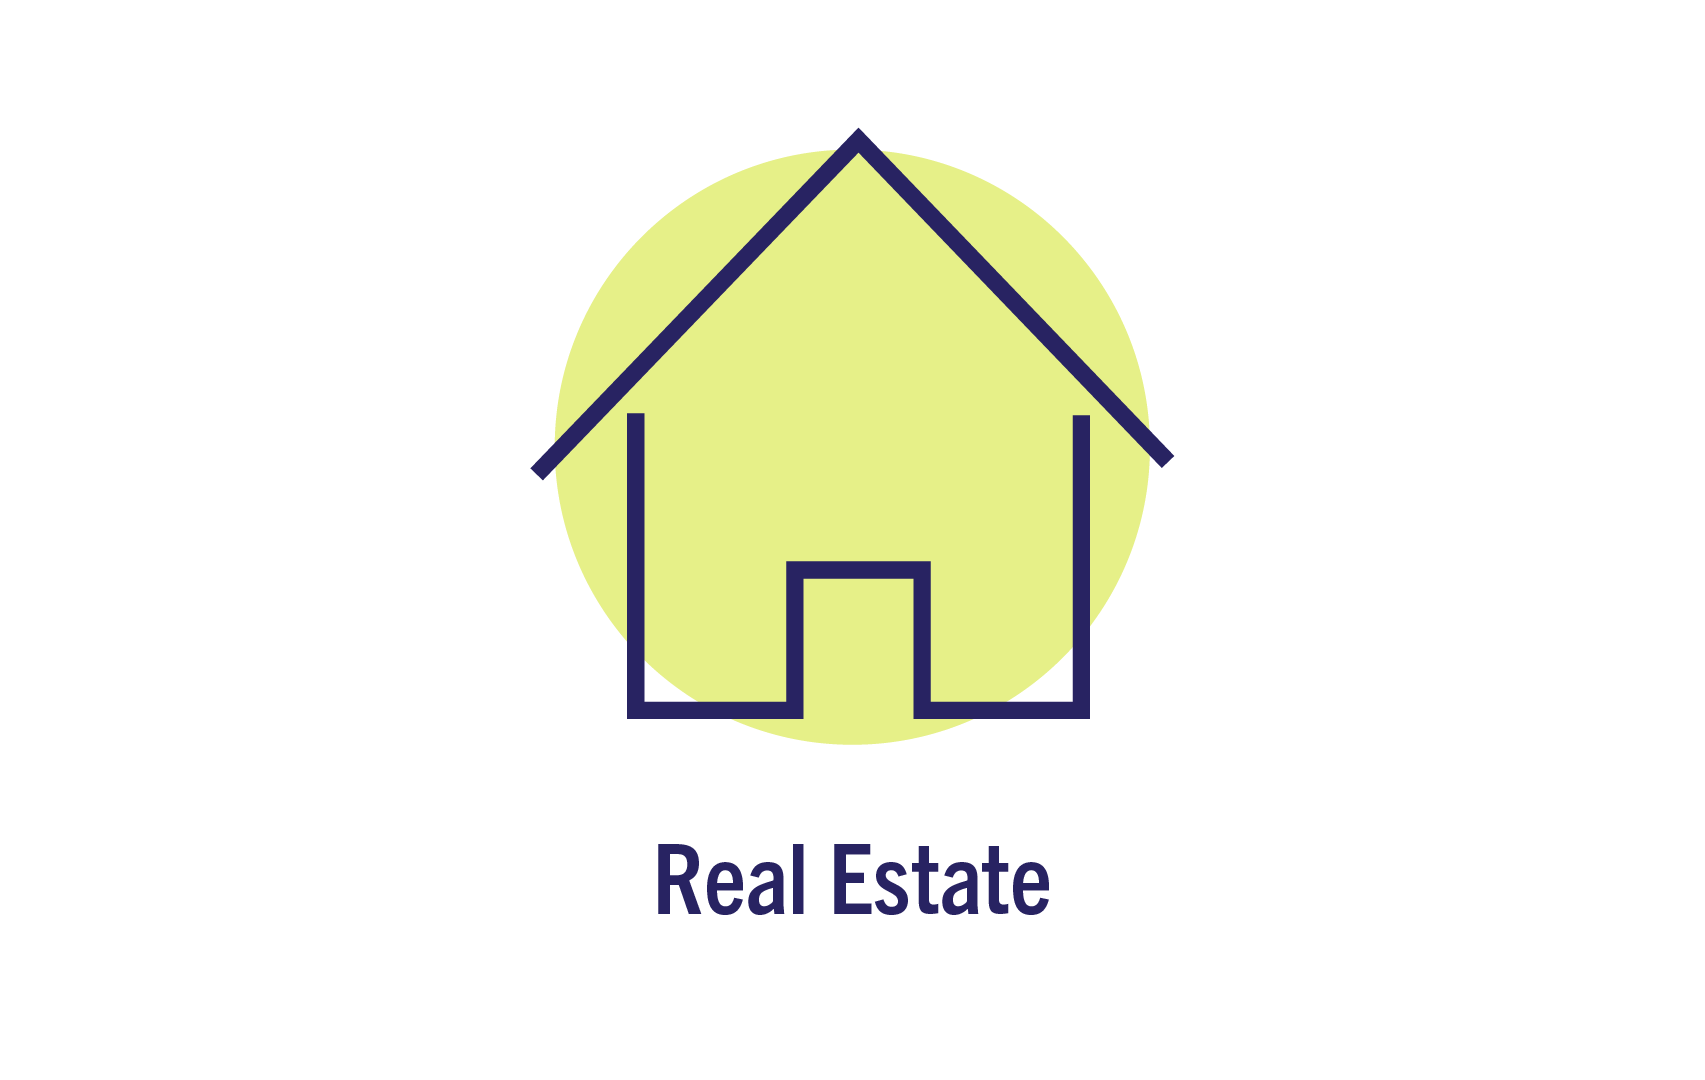 real_estate